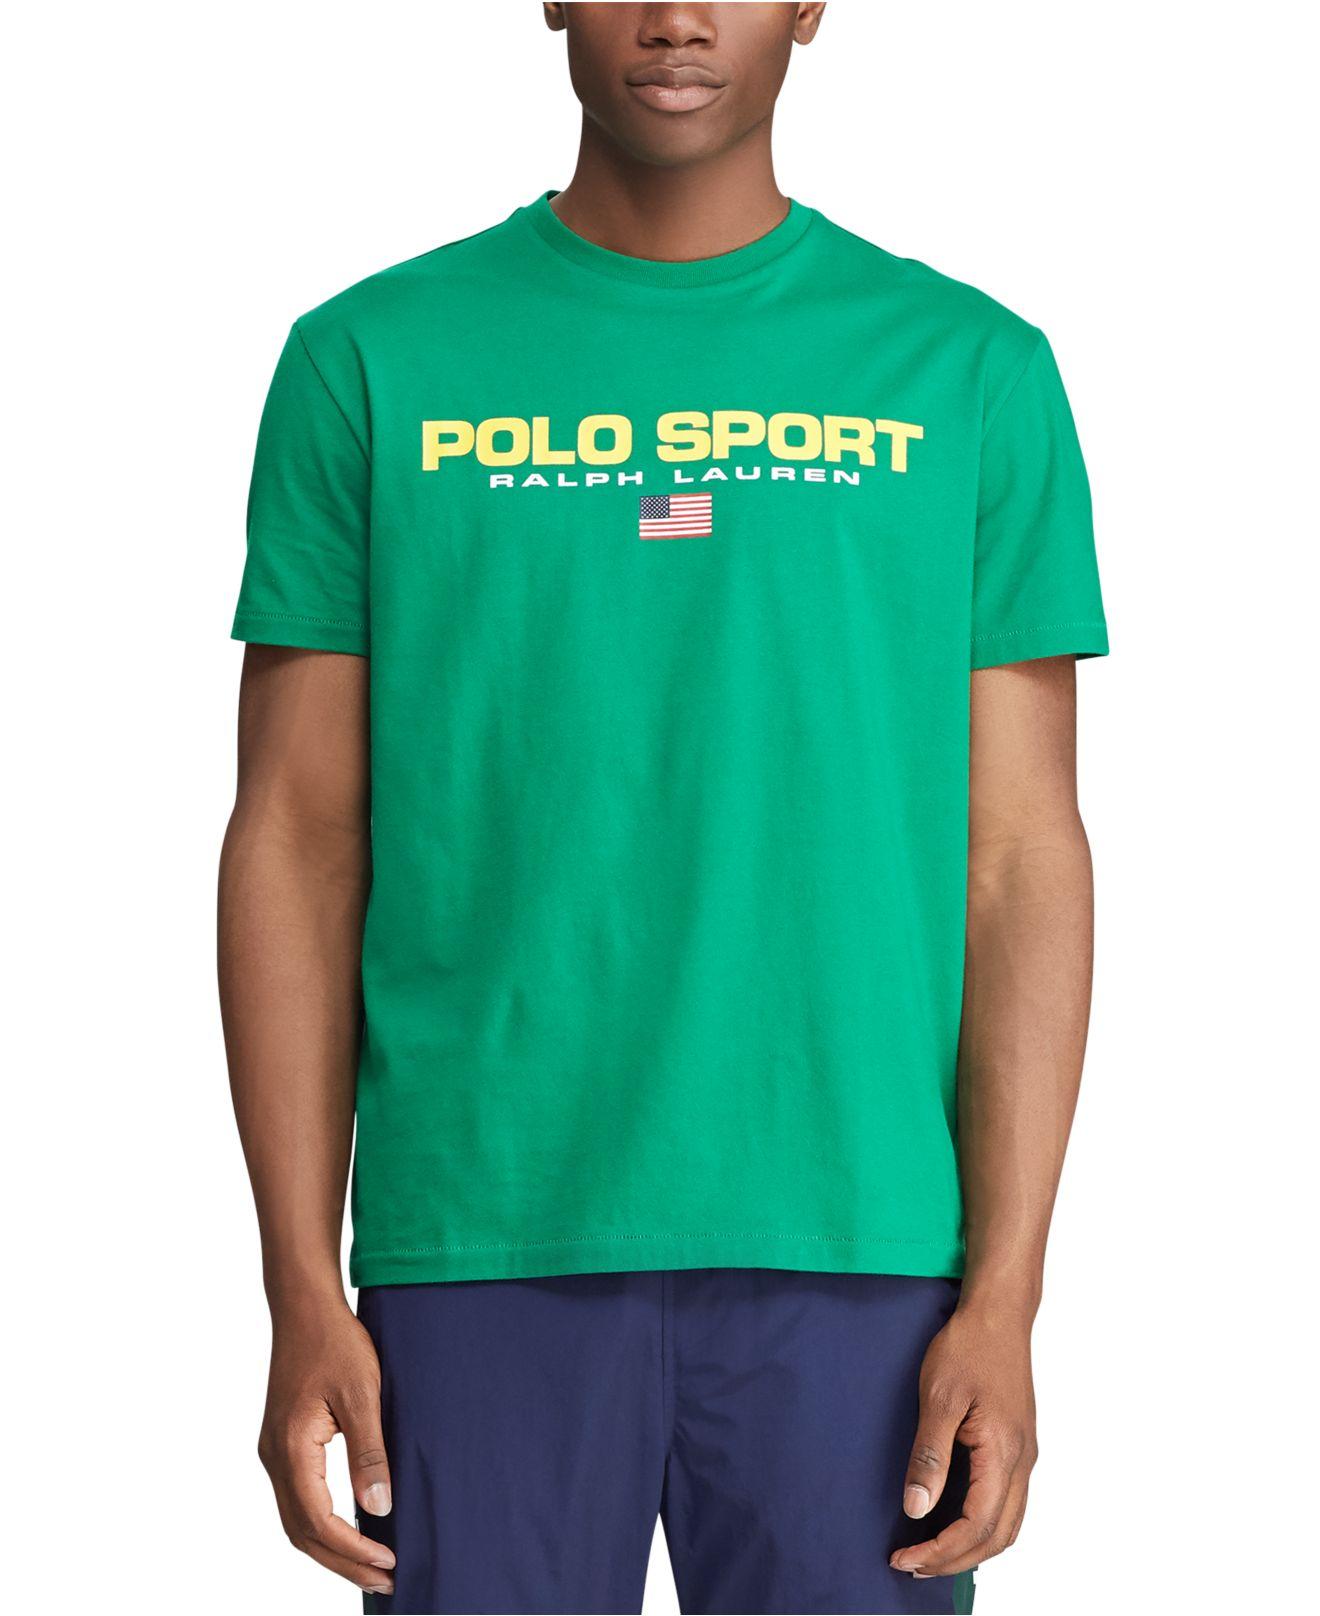 Polo Ralph Lauren Polo Sport Cotton T-shirt in Green for Men - Lyst